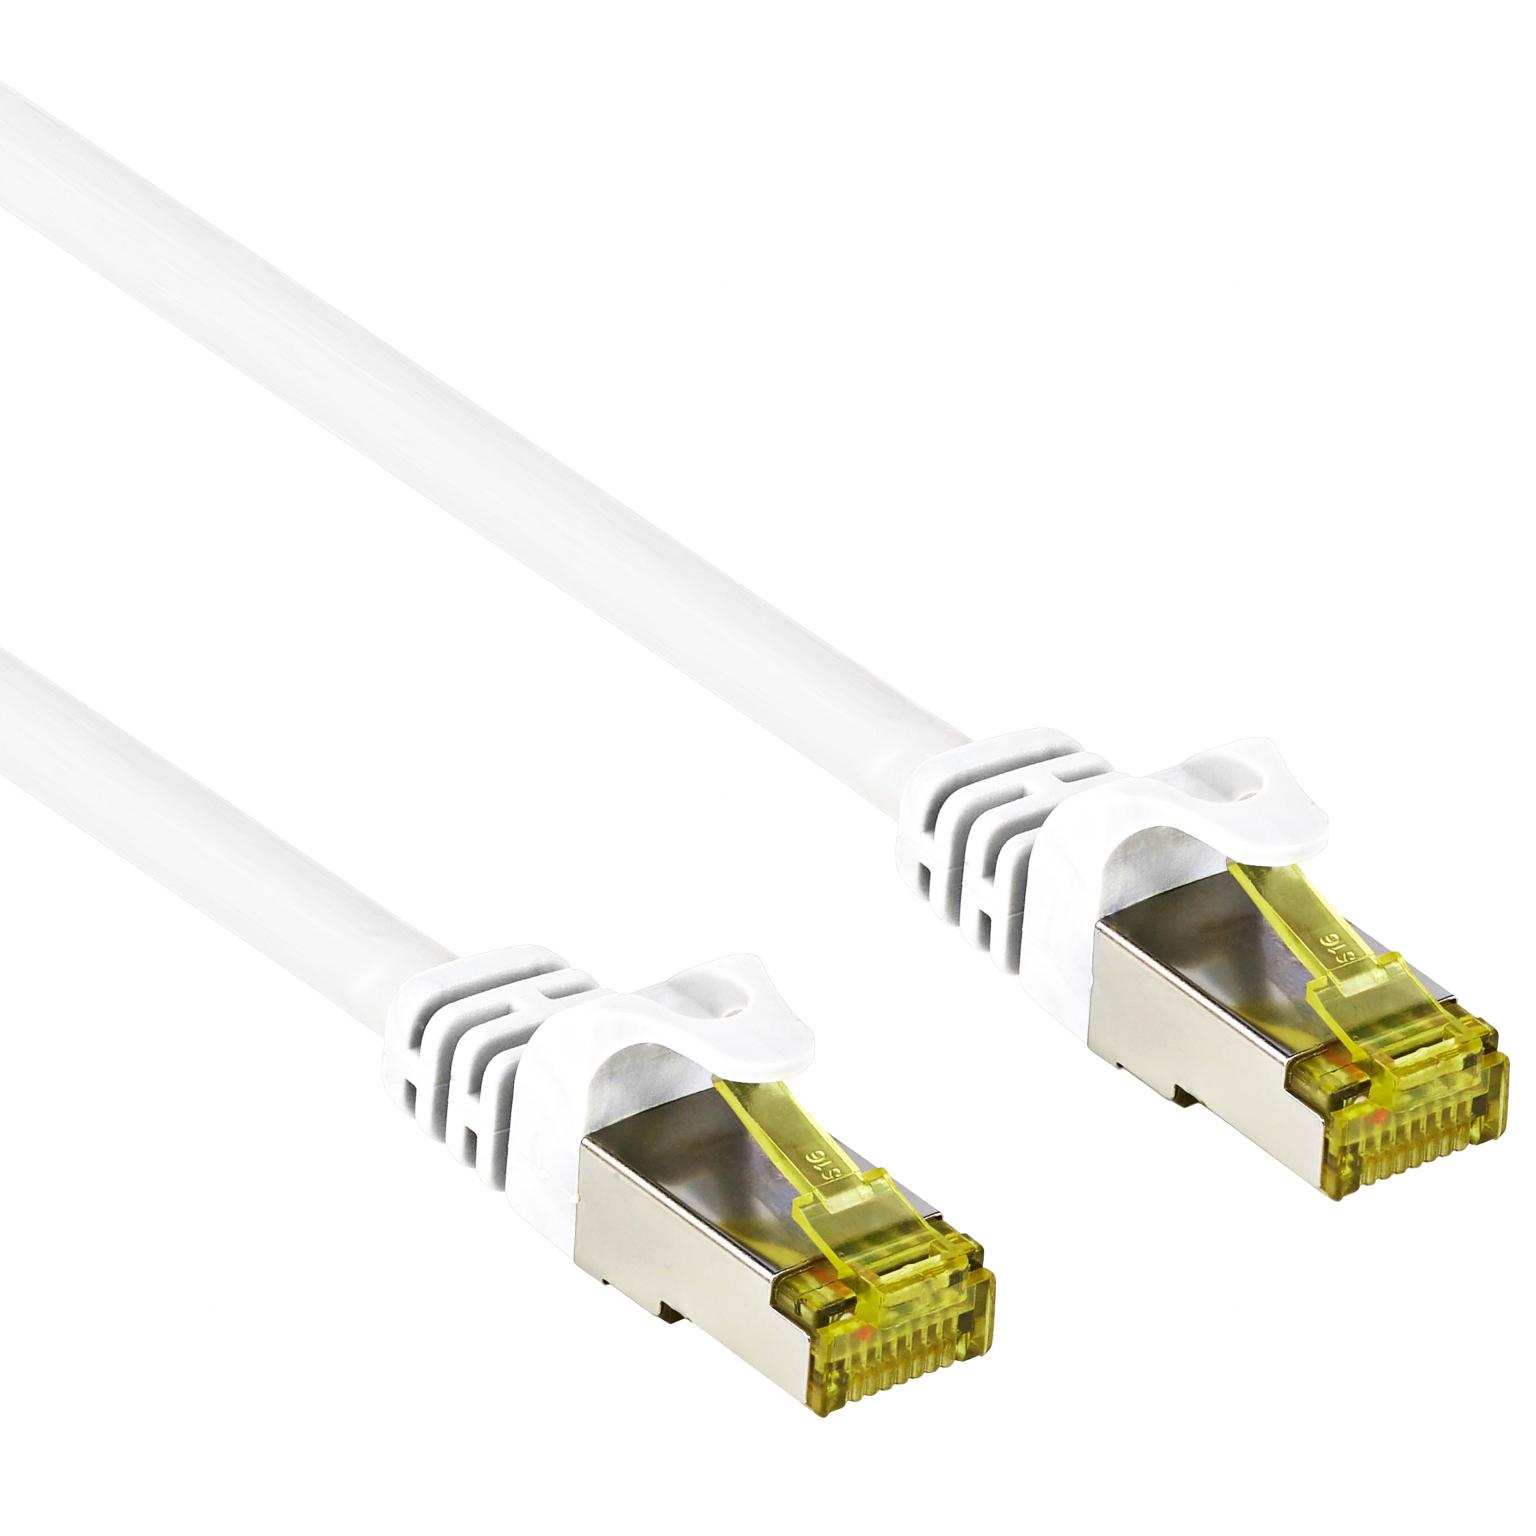 S/FTP Cat 7 kabel - Allteq